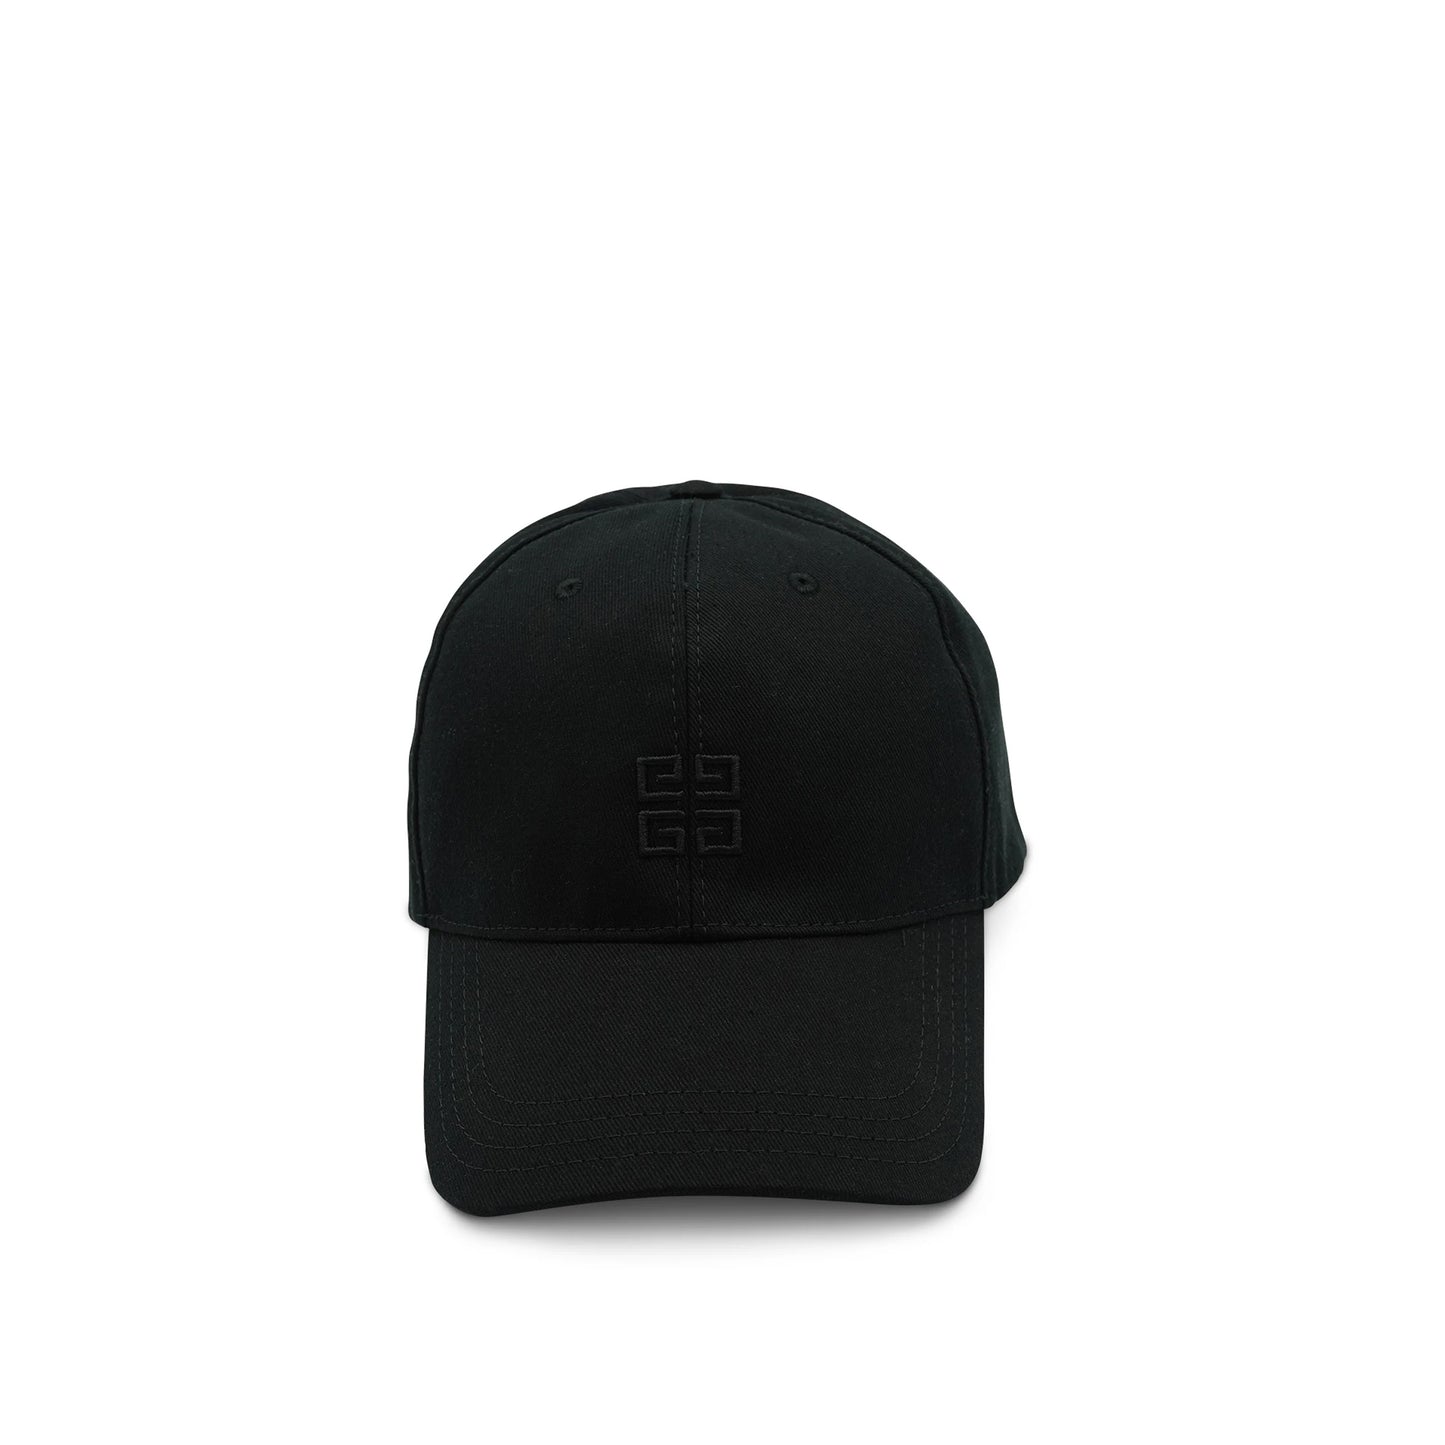 Curved Cap with 4G Block Closure in Black